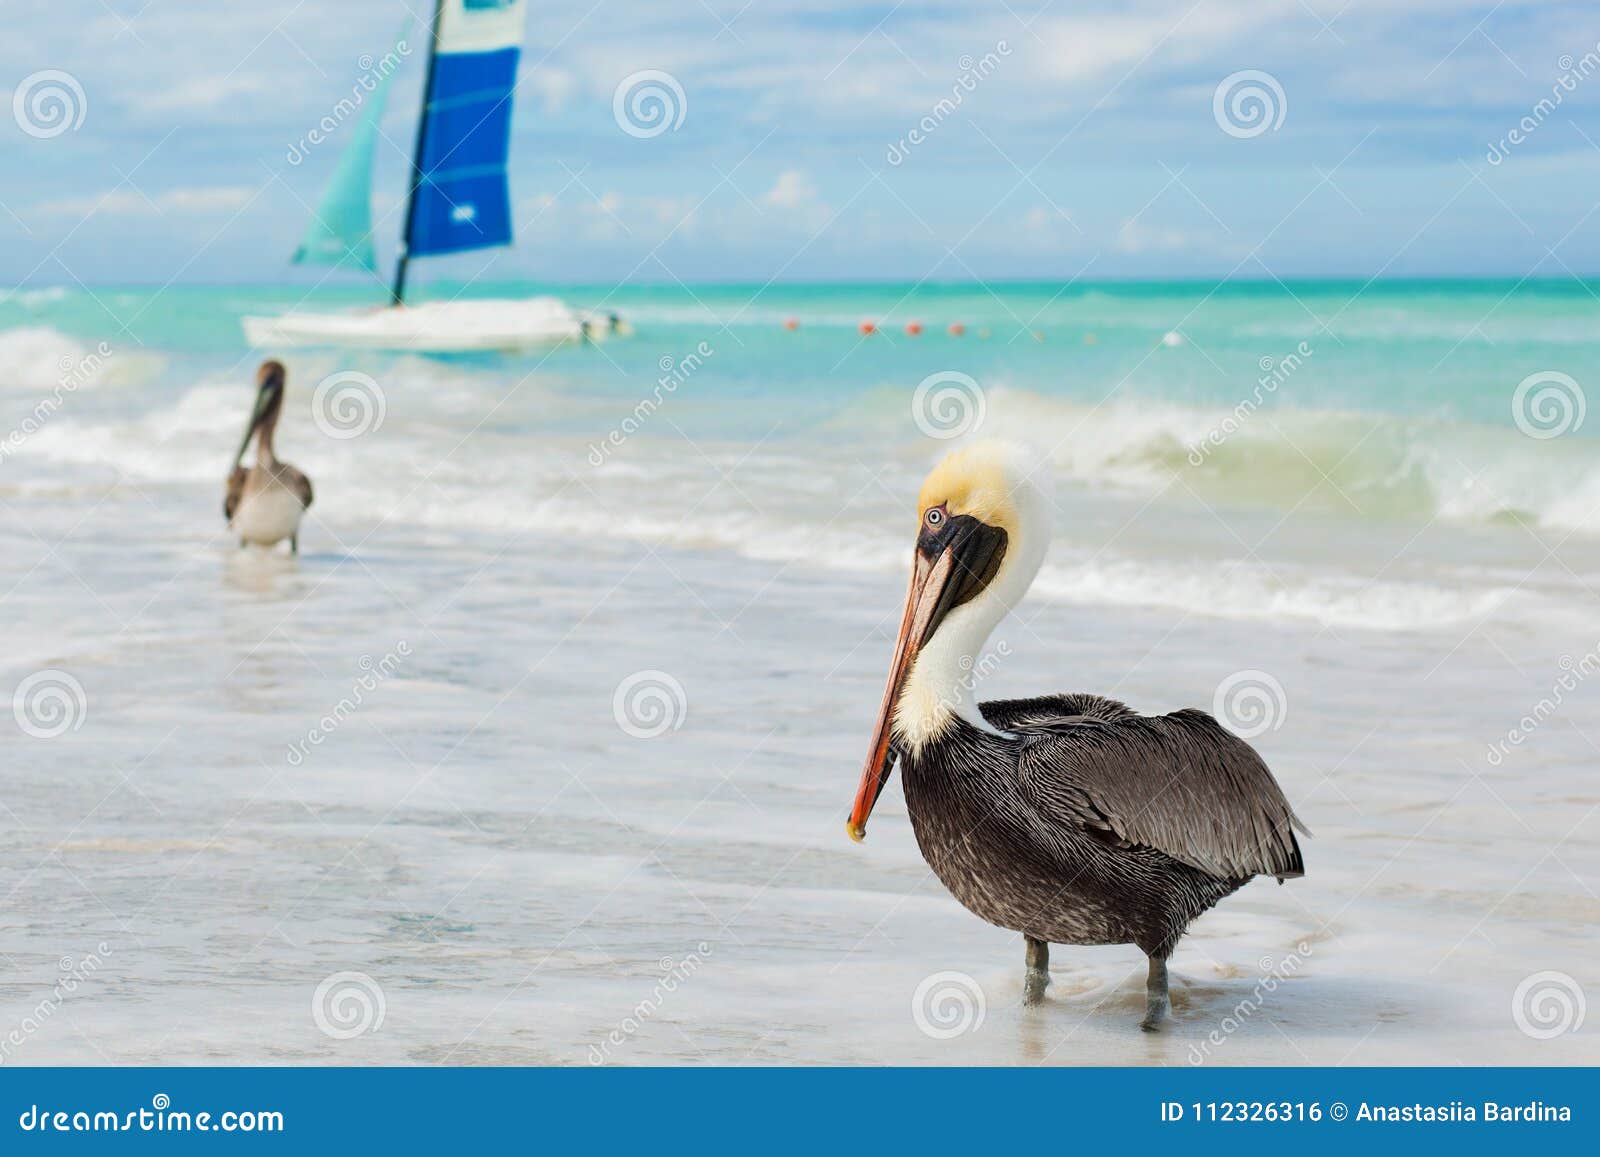 pelicans on the beach. varadero, cuba